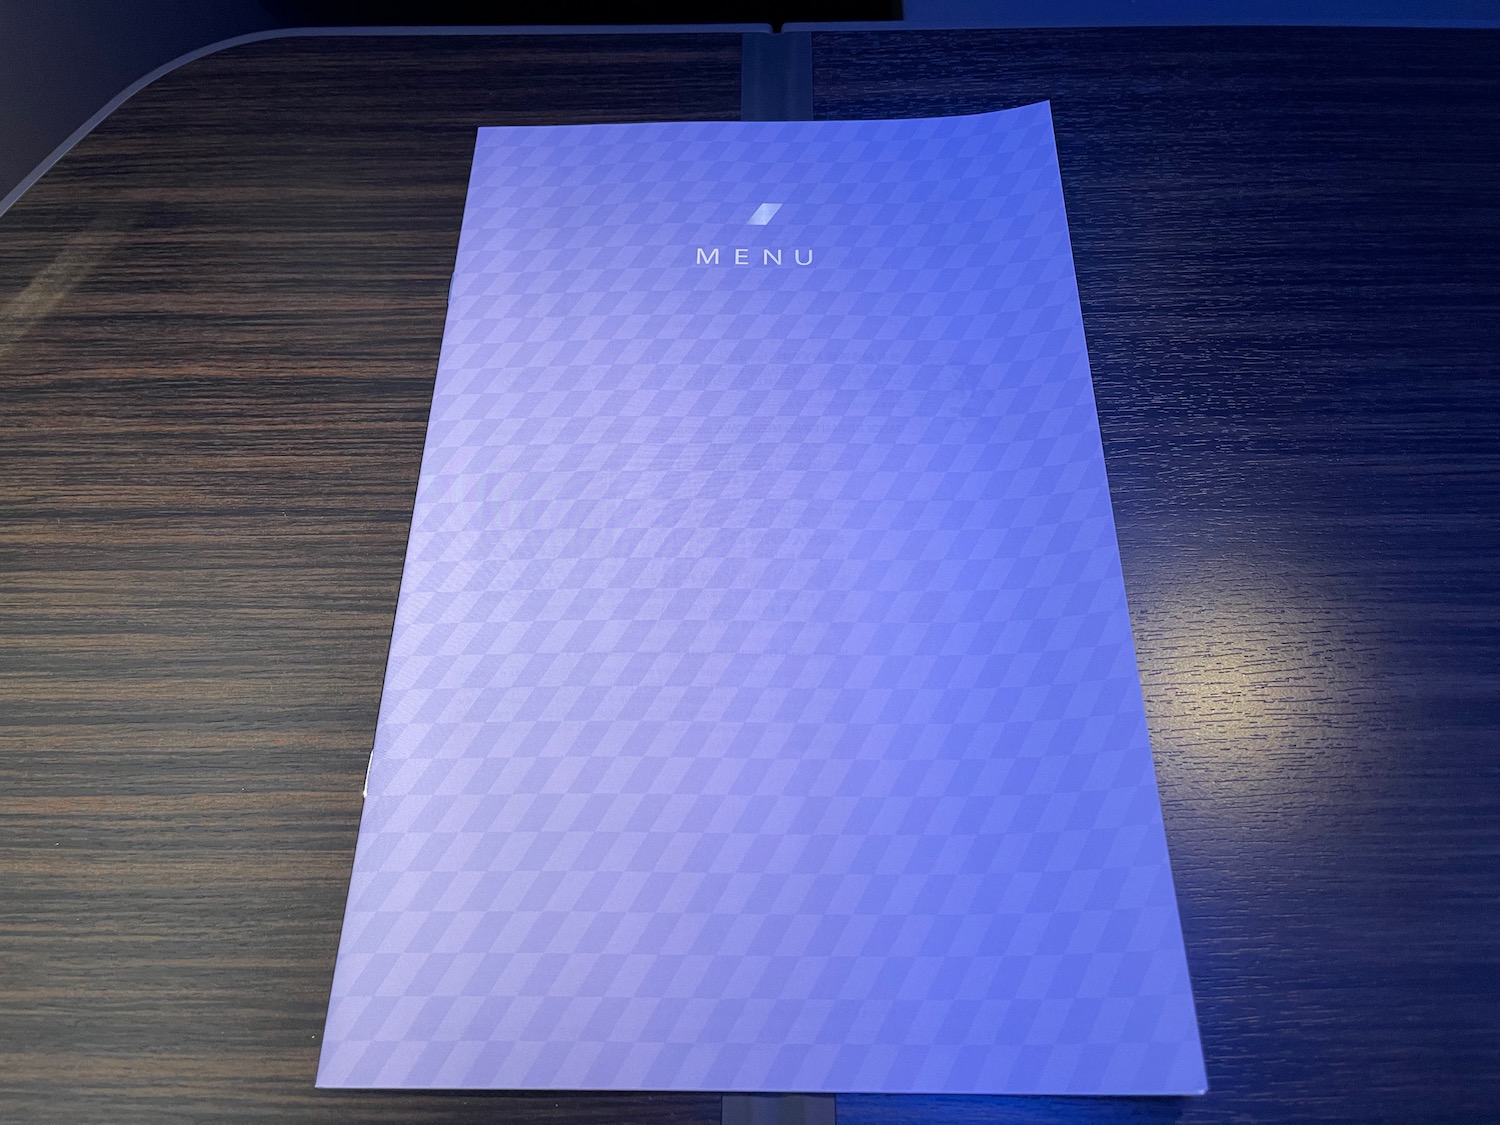 a blue menu on a table